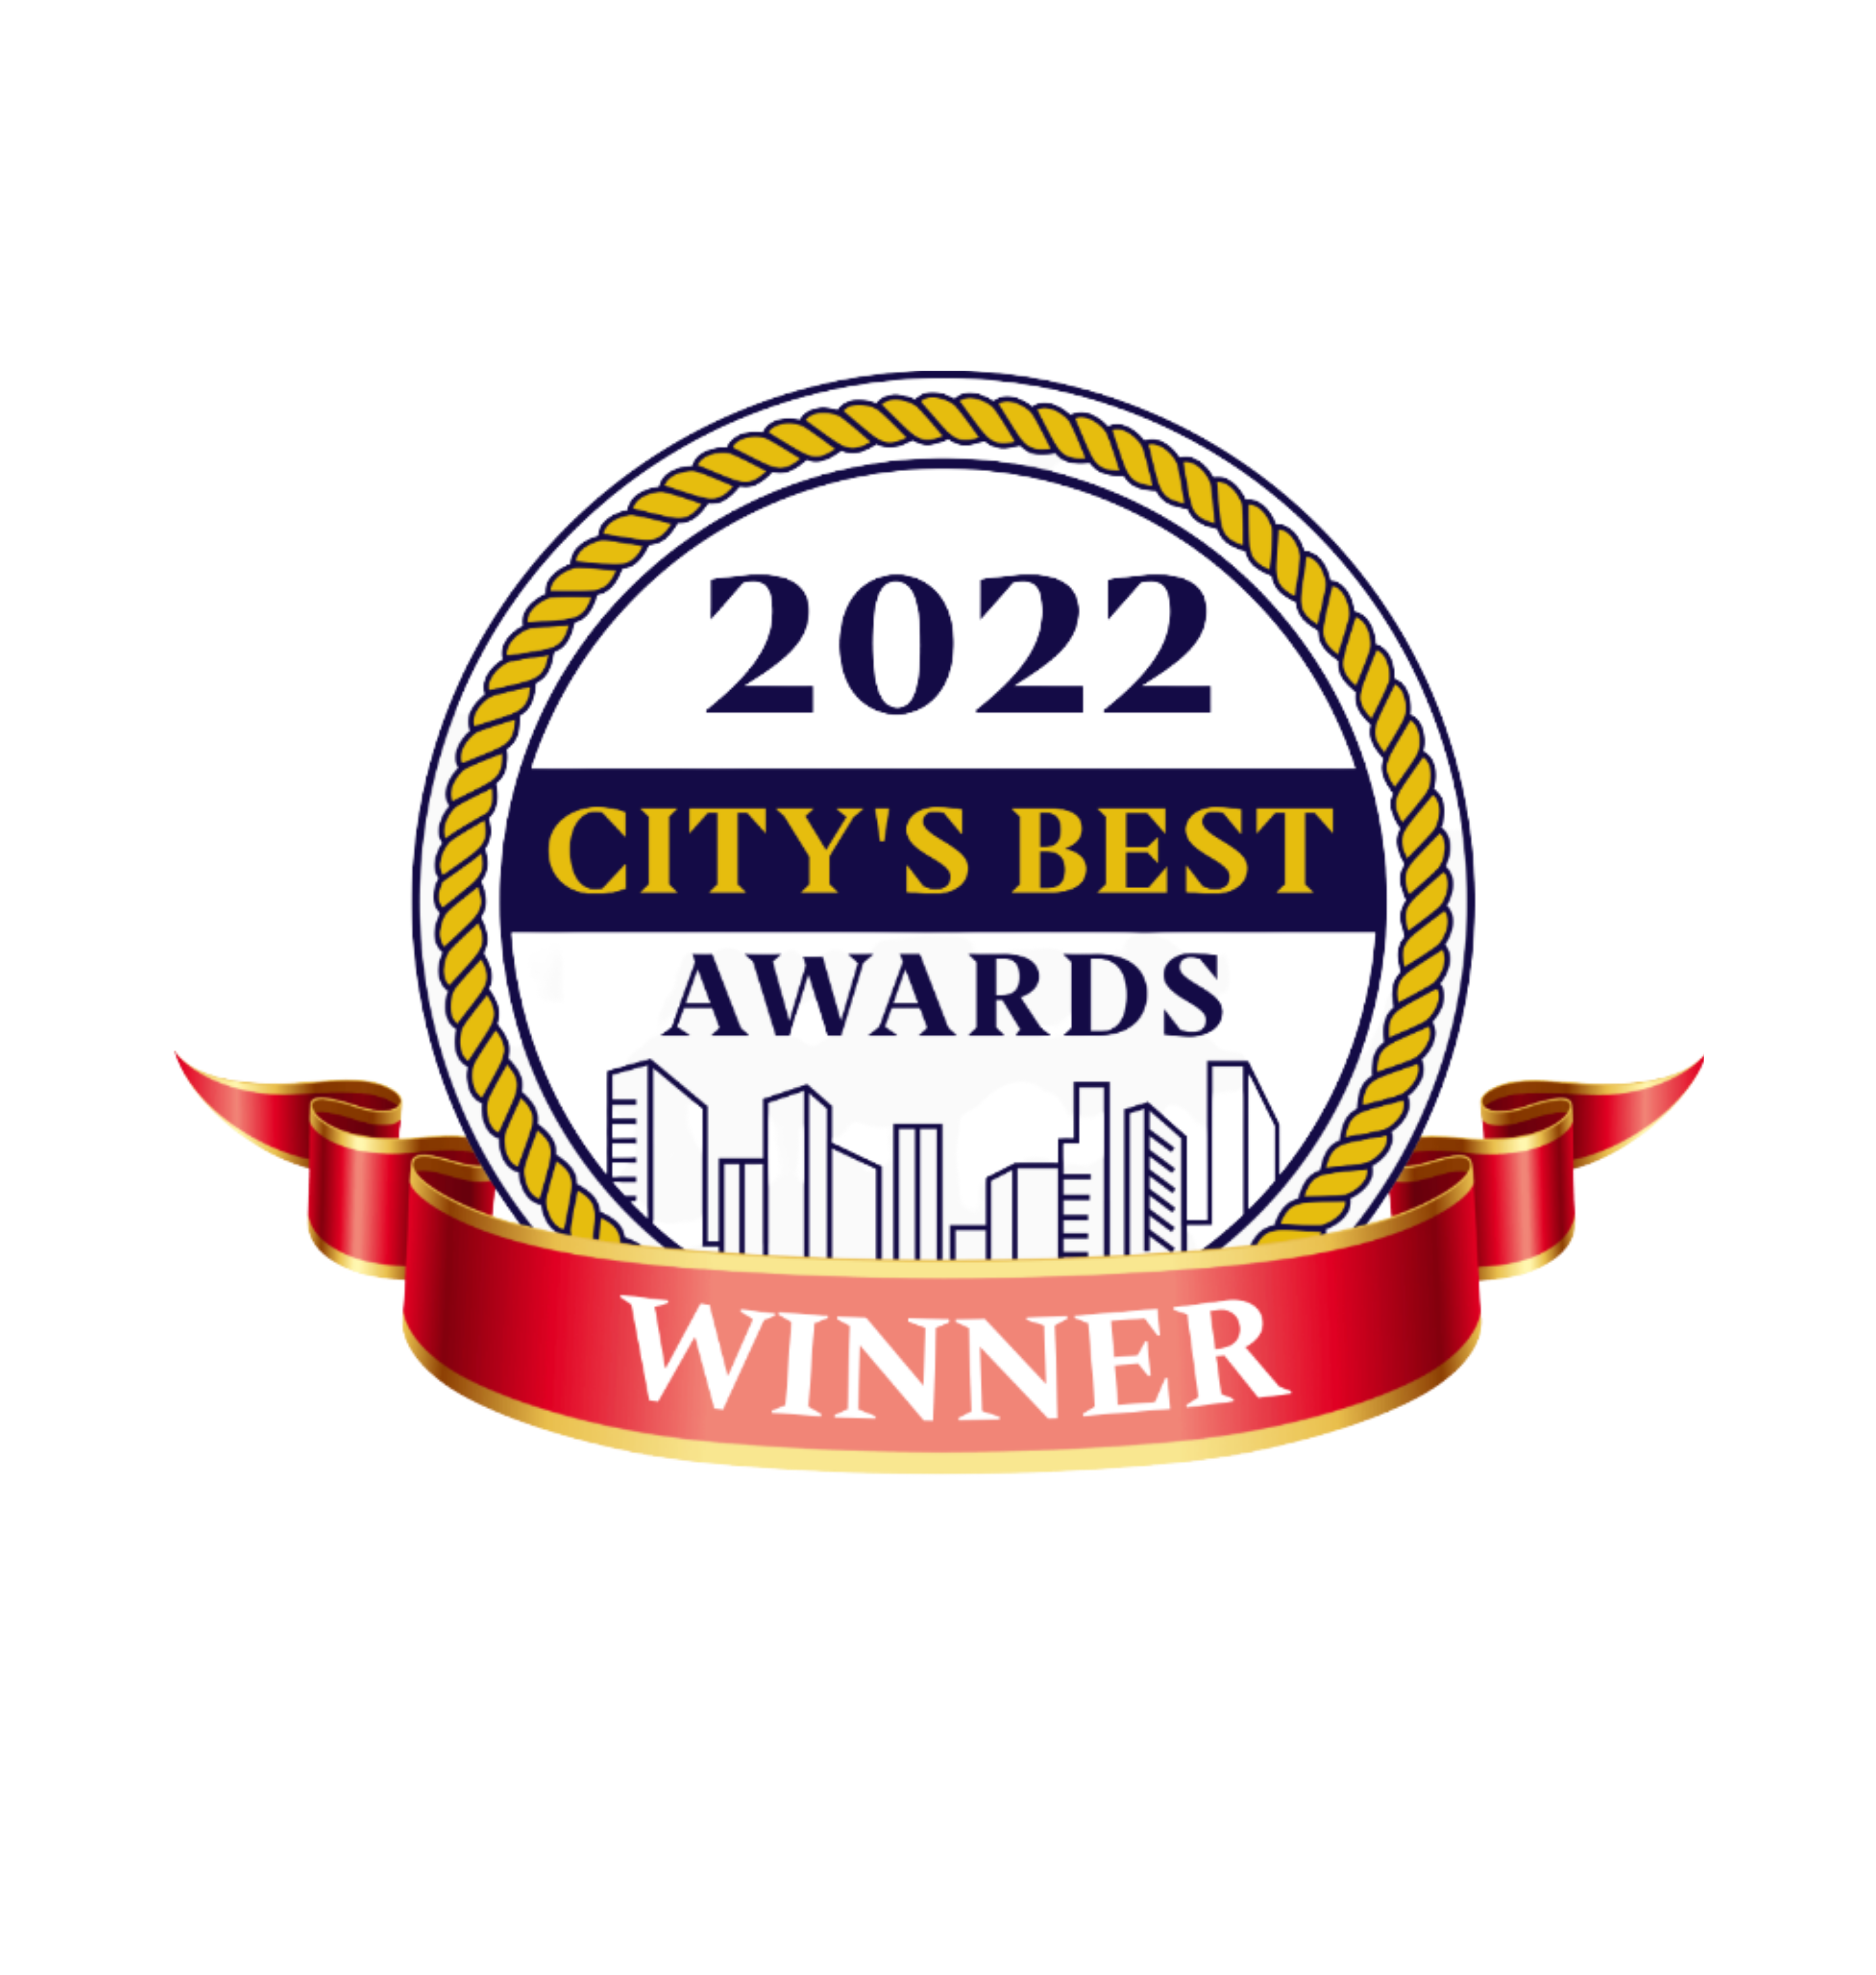 2022 award seal